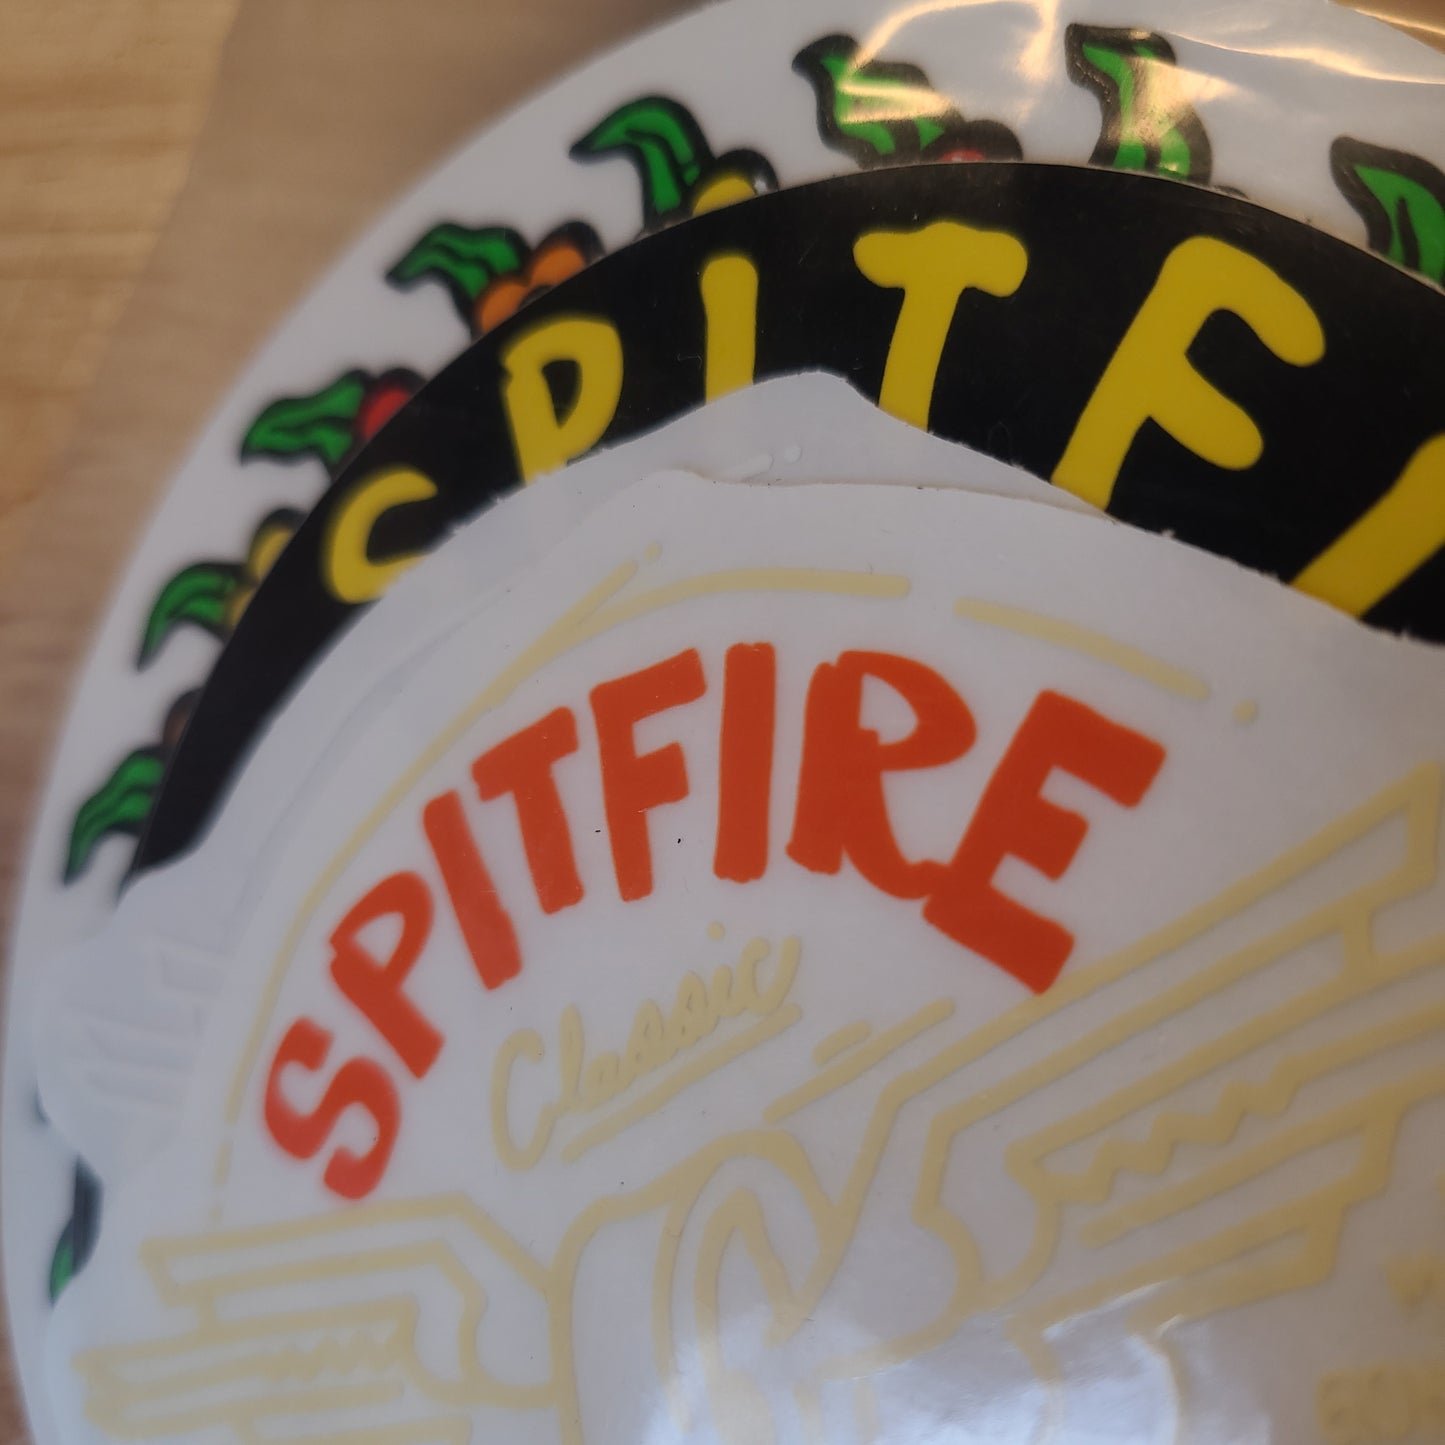 Spitfire Sticker Pack by Mark Gonzales